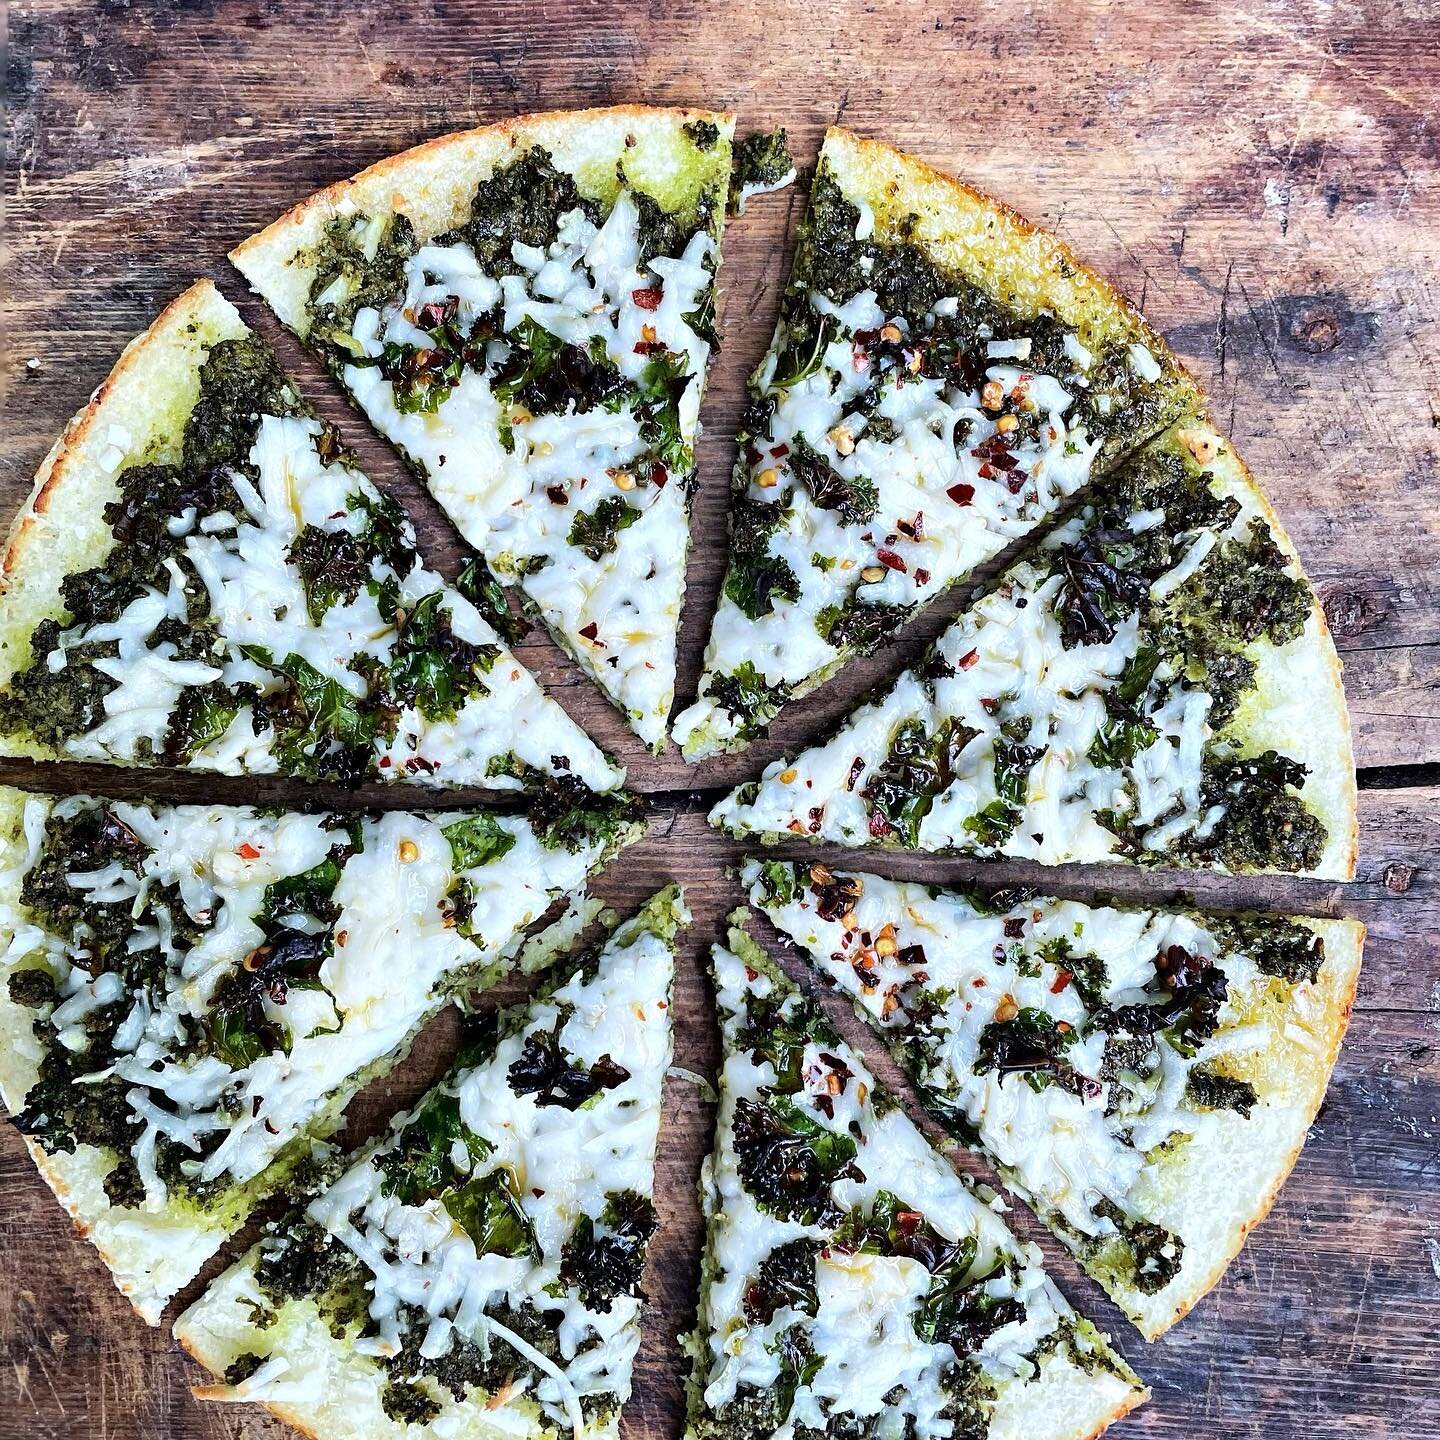 Kale pizza to the max.
Kale pesto +almond milk mozz + charred kale + chili oil on a cauliflower crust
GF + Vegan